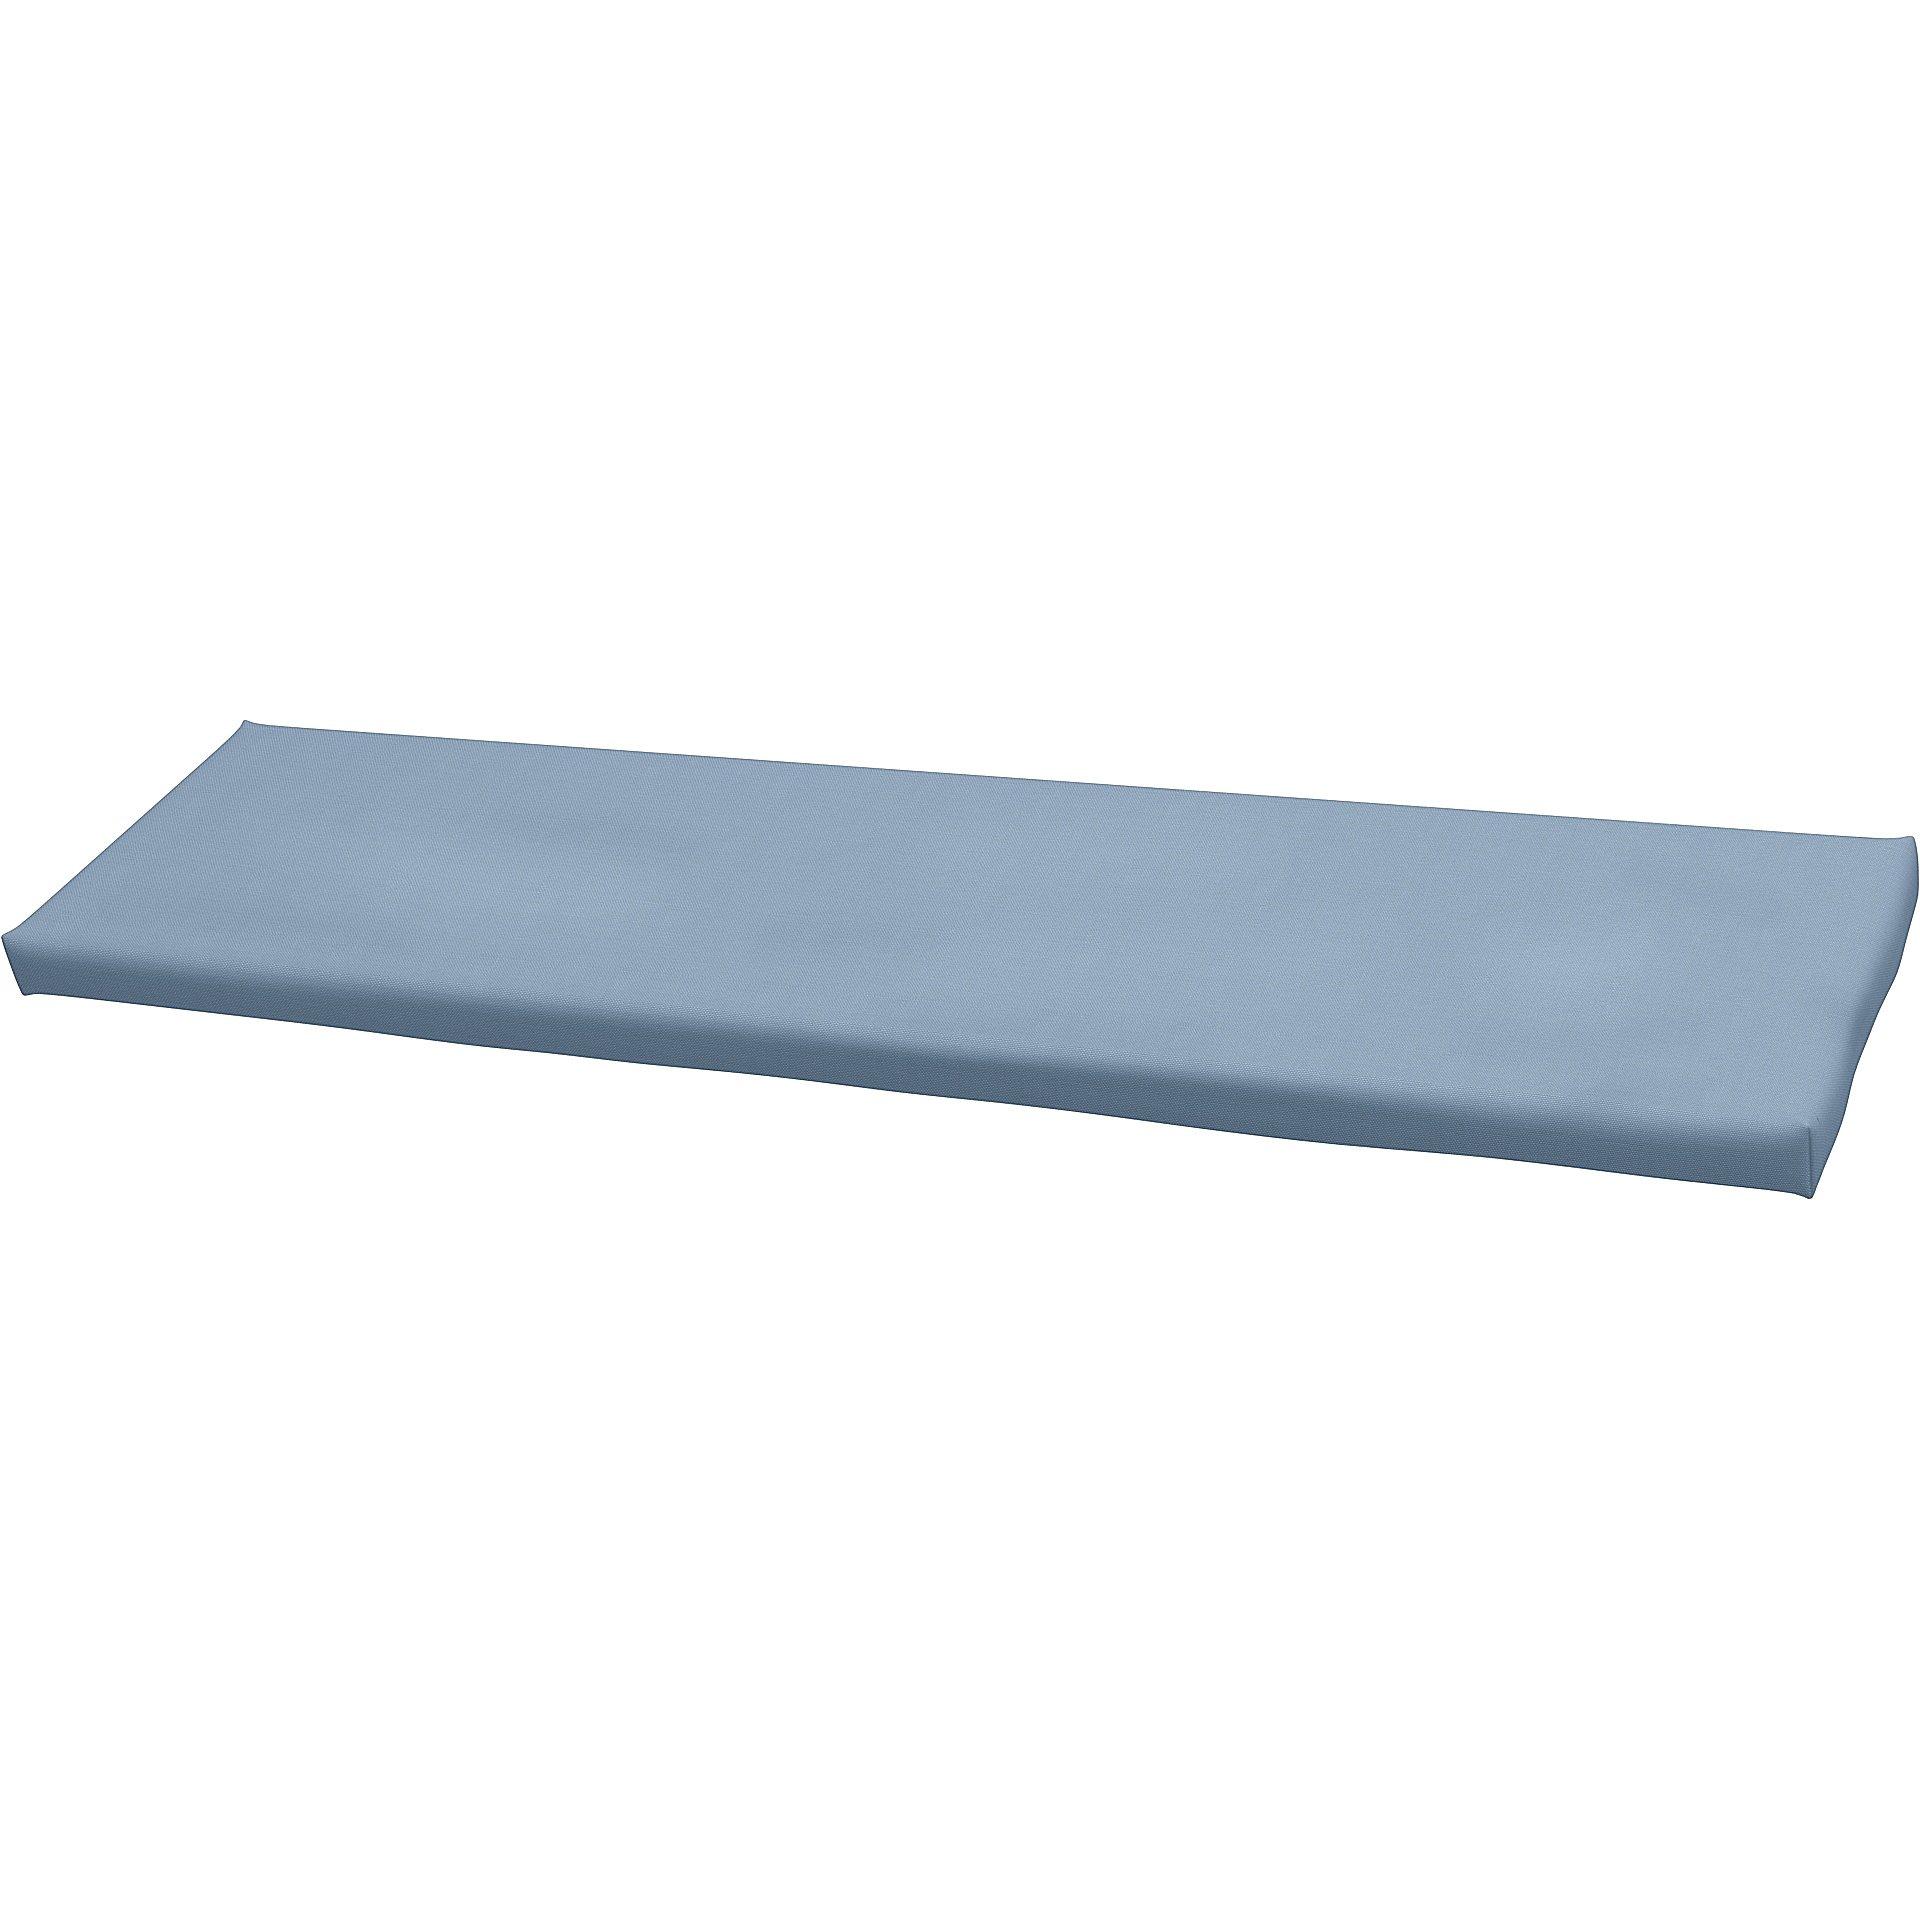 IKEA - Universal bench cushion cover 120x35x3,5 cm, Dusty Blue, Cotton - Bemz